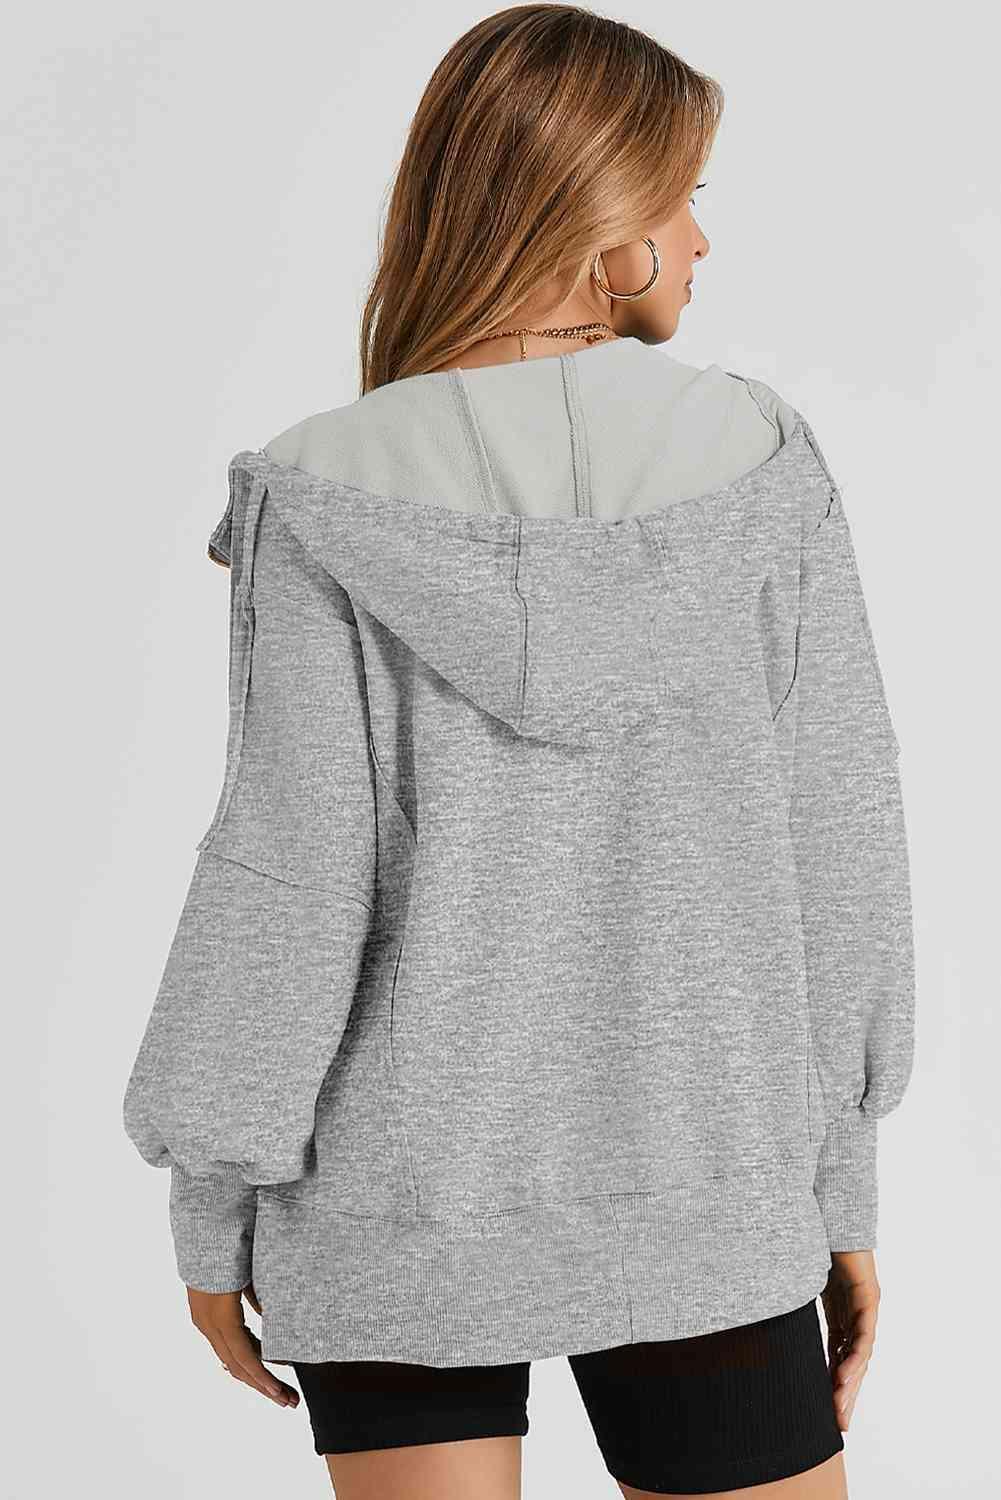 Zip Up Long Sleeve Drawstring Hoodie - Bona Fide Fashion